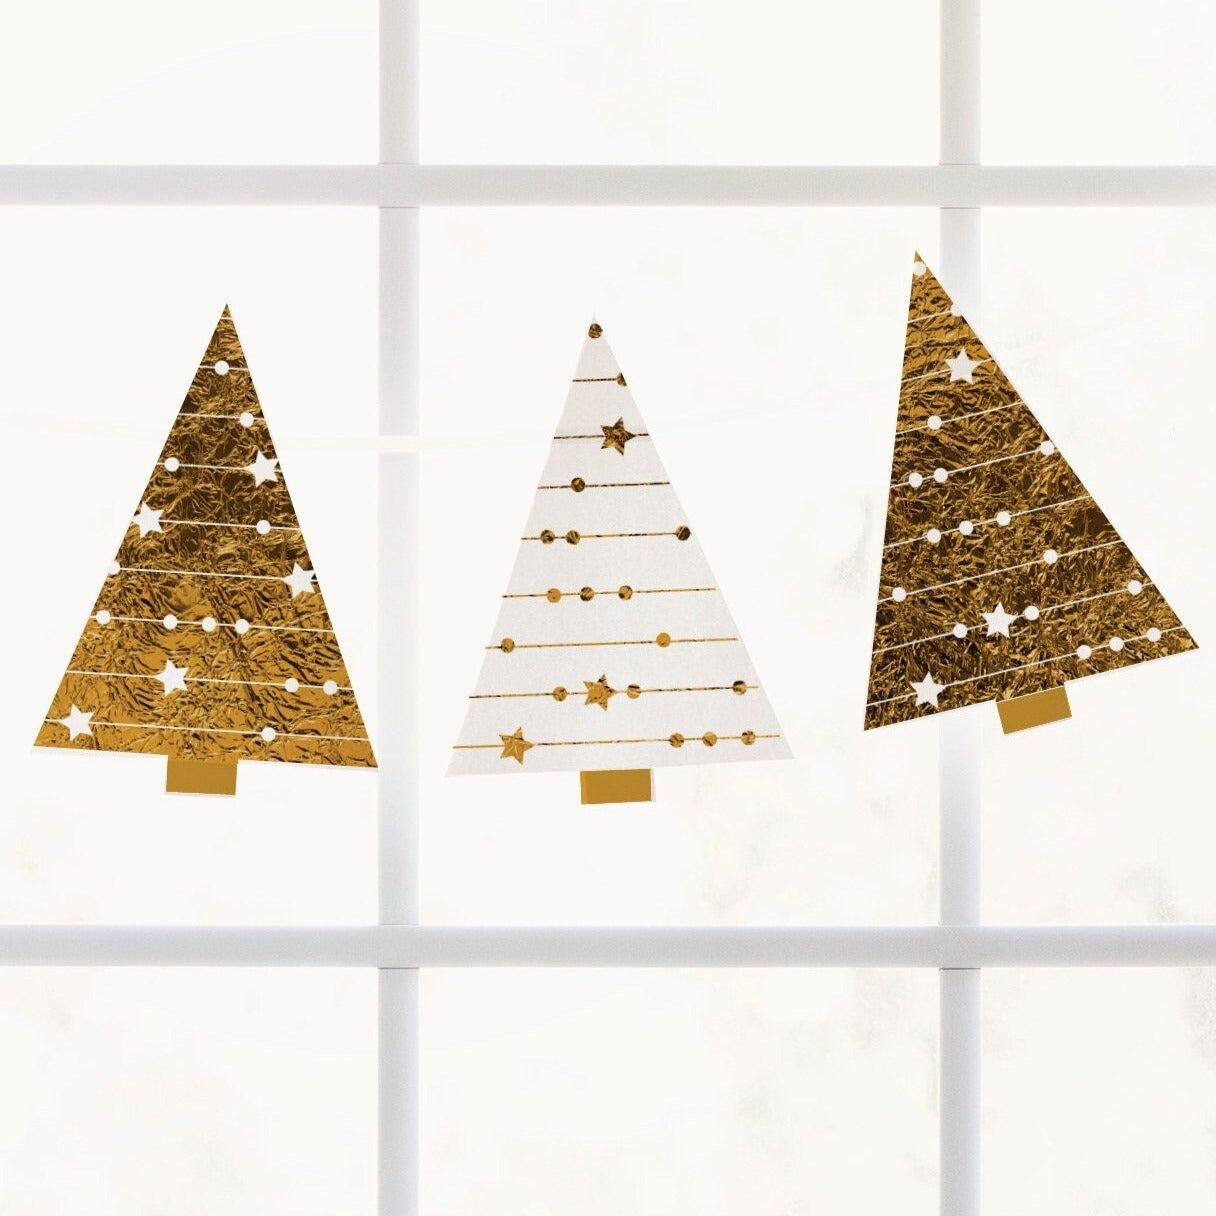 Gold Christmas Tree Garland - PRINTABLE banner, instant download PDF. Minimalist modern, abstract, stars design. Cute for seasonal mantel.